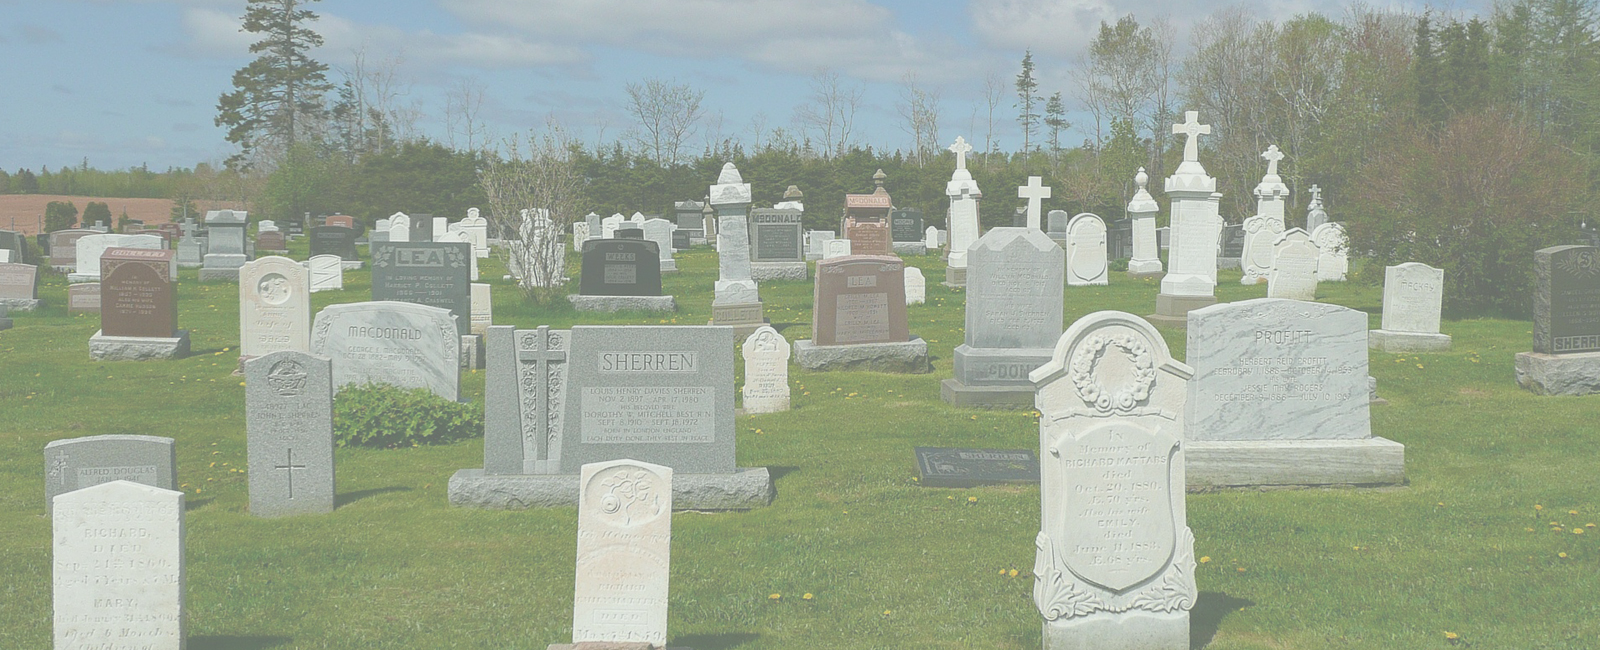 cremation memorials